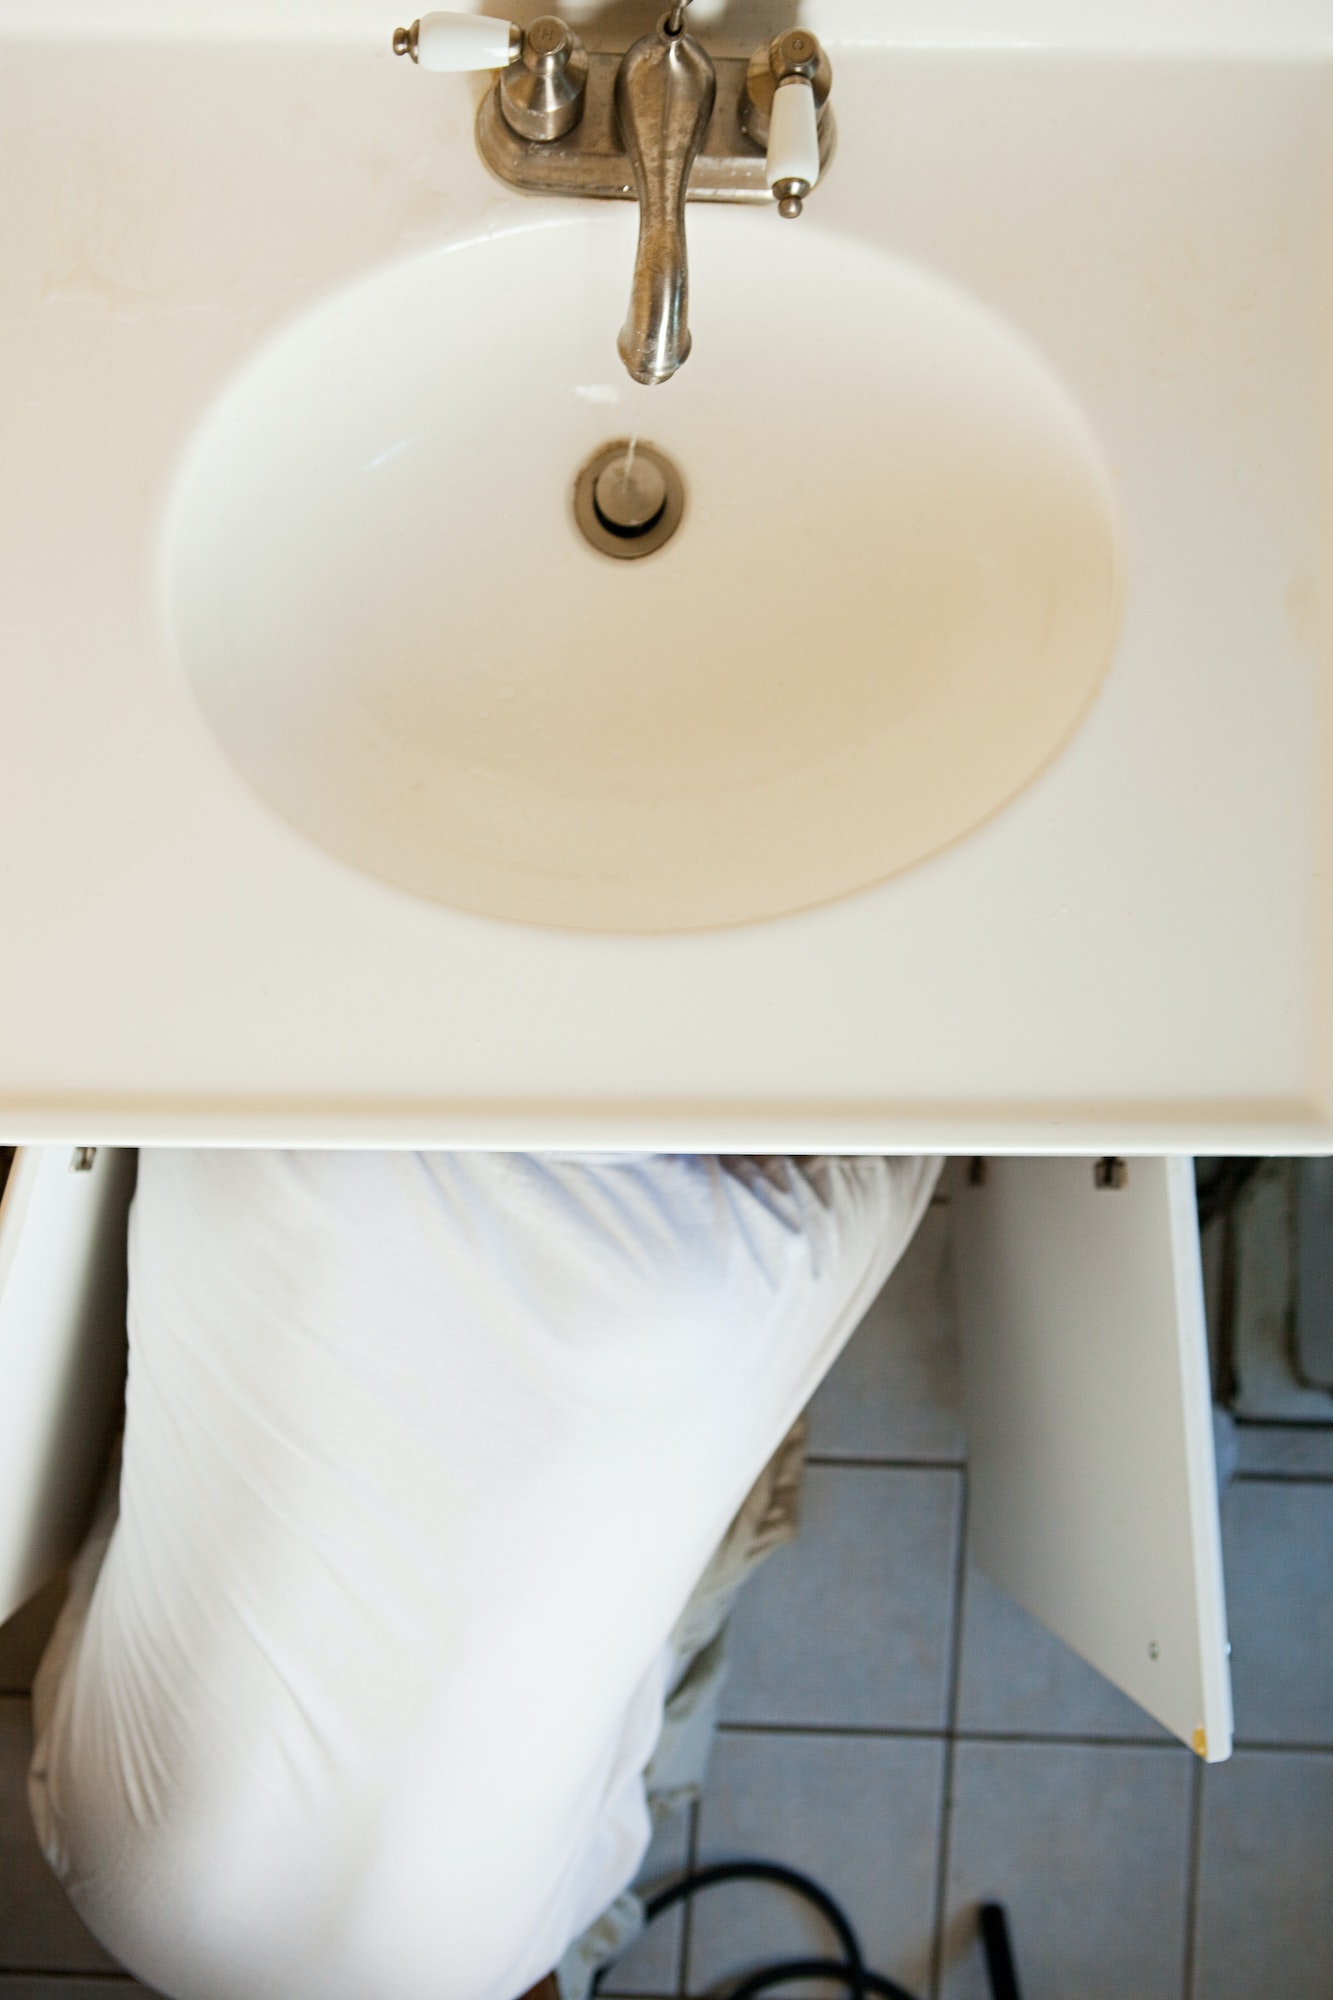 Plumber repairing sink